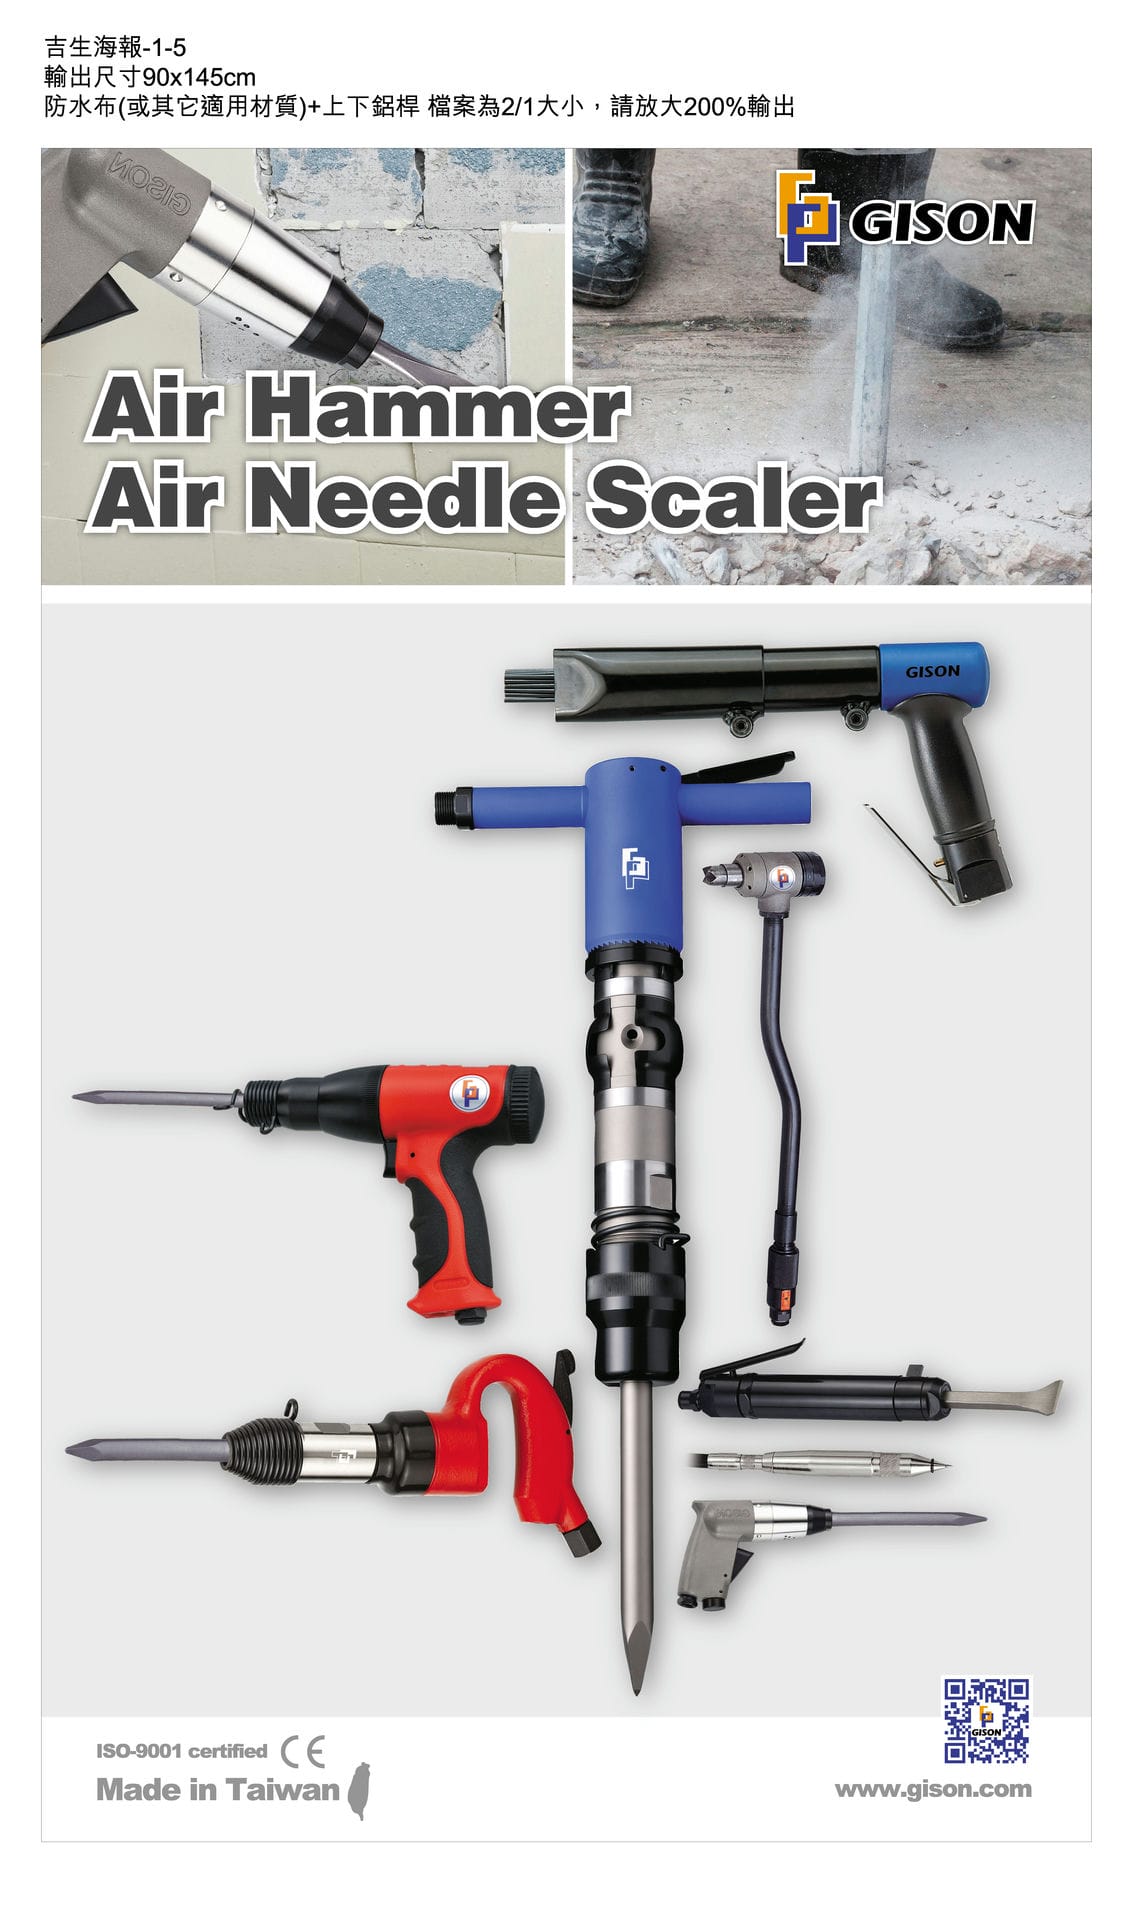 Air Hammer / Air Needle Scaler